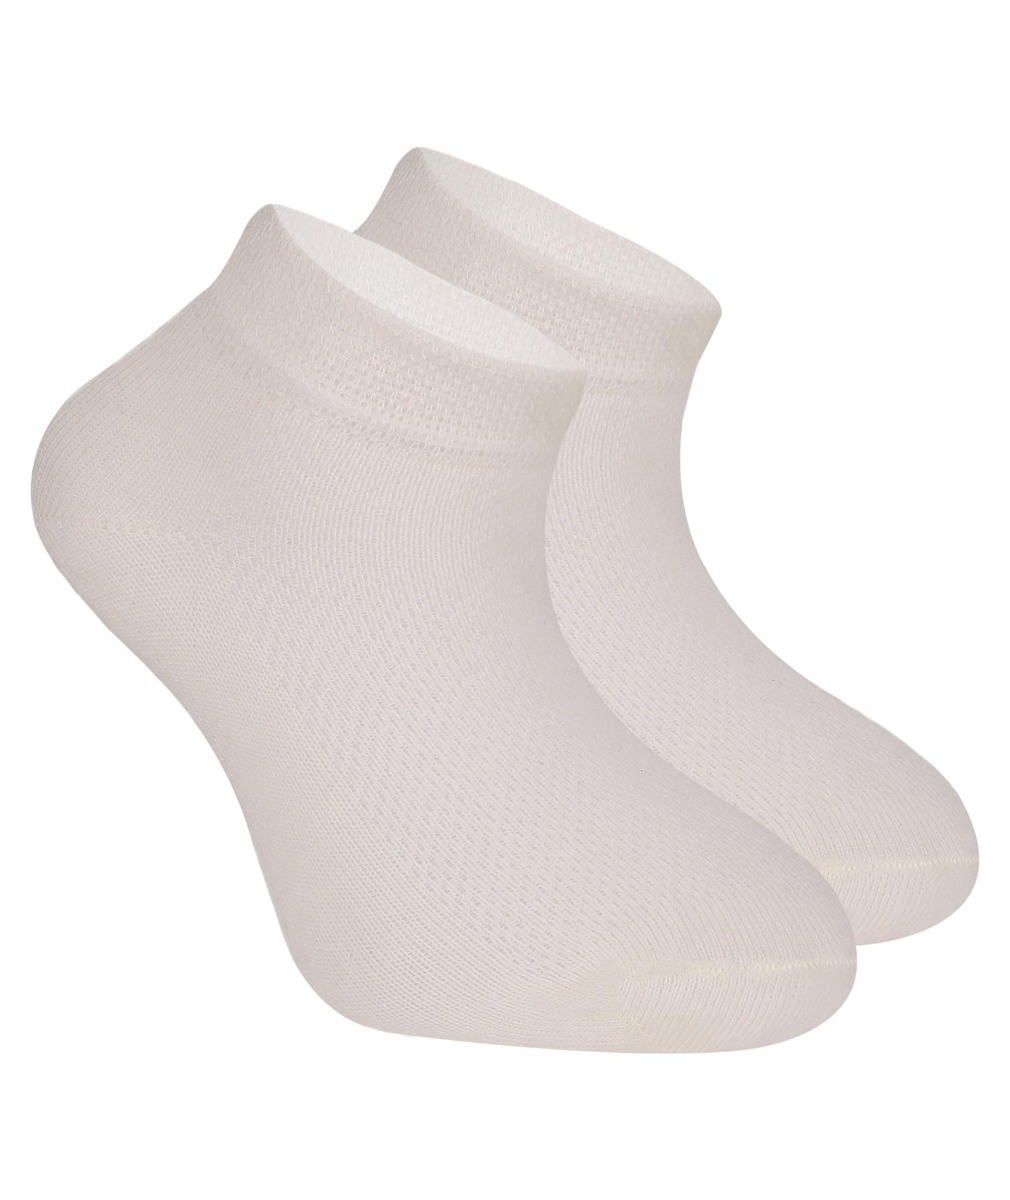 Unisex Stretch Cotton Ankle Socks, for Boys & Girls - Cream